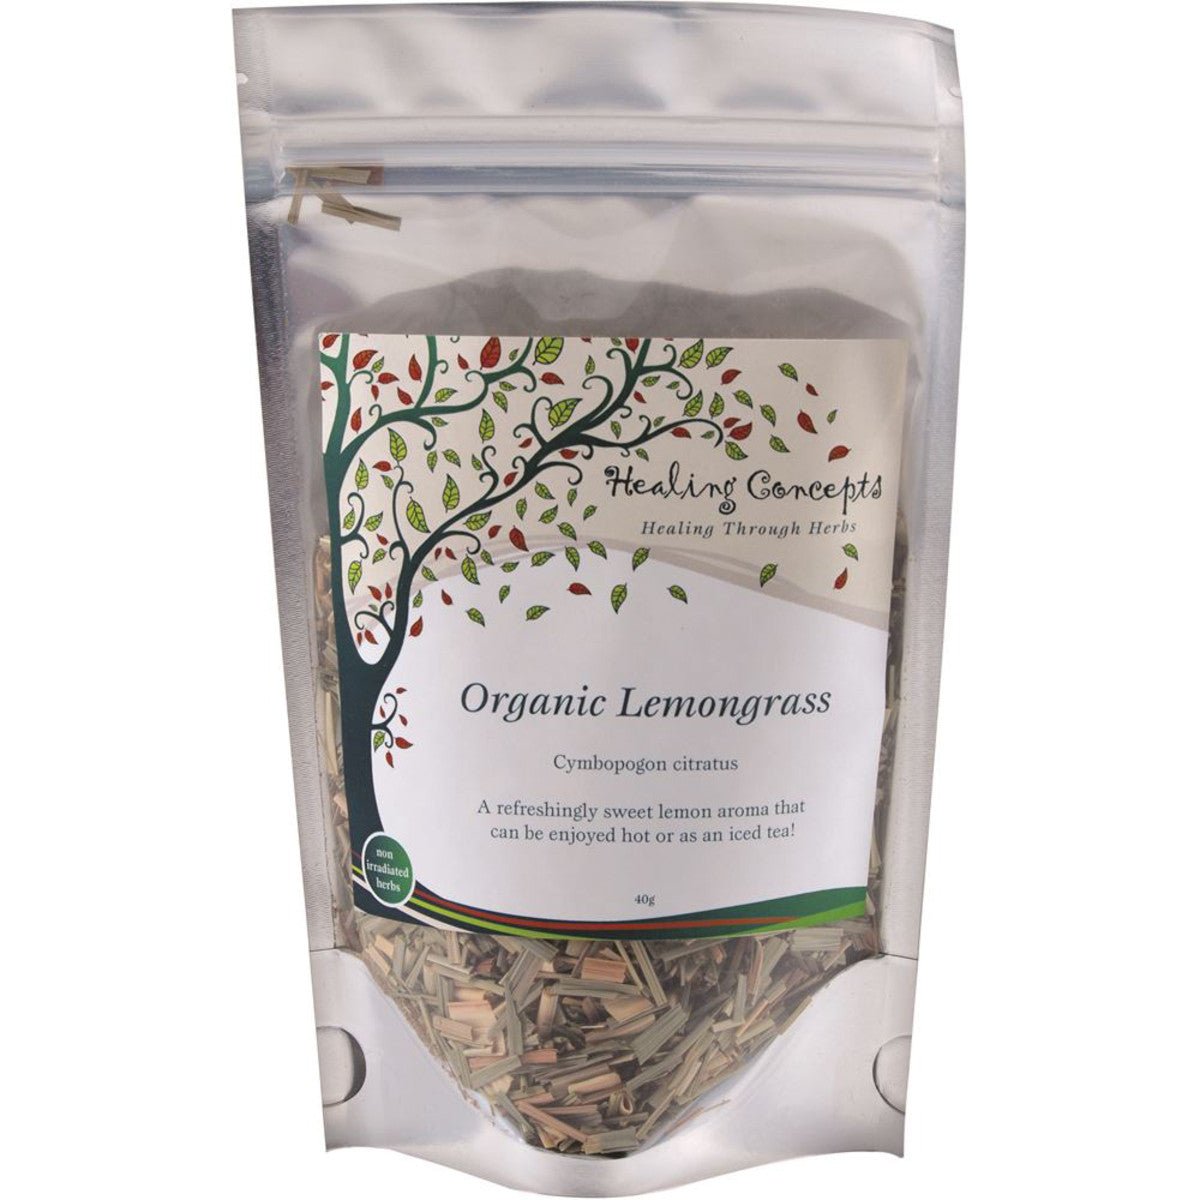 HEALING CONCEPTS Organic Lemongrass 40g - Dr Earth - Drinks